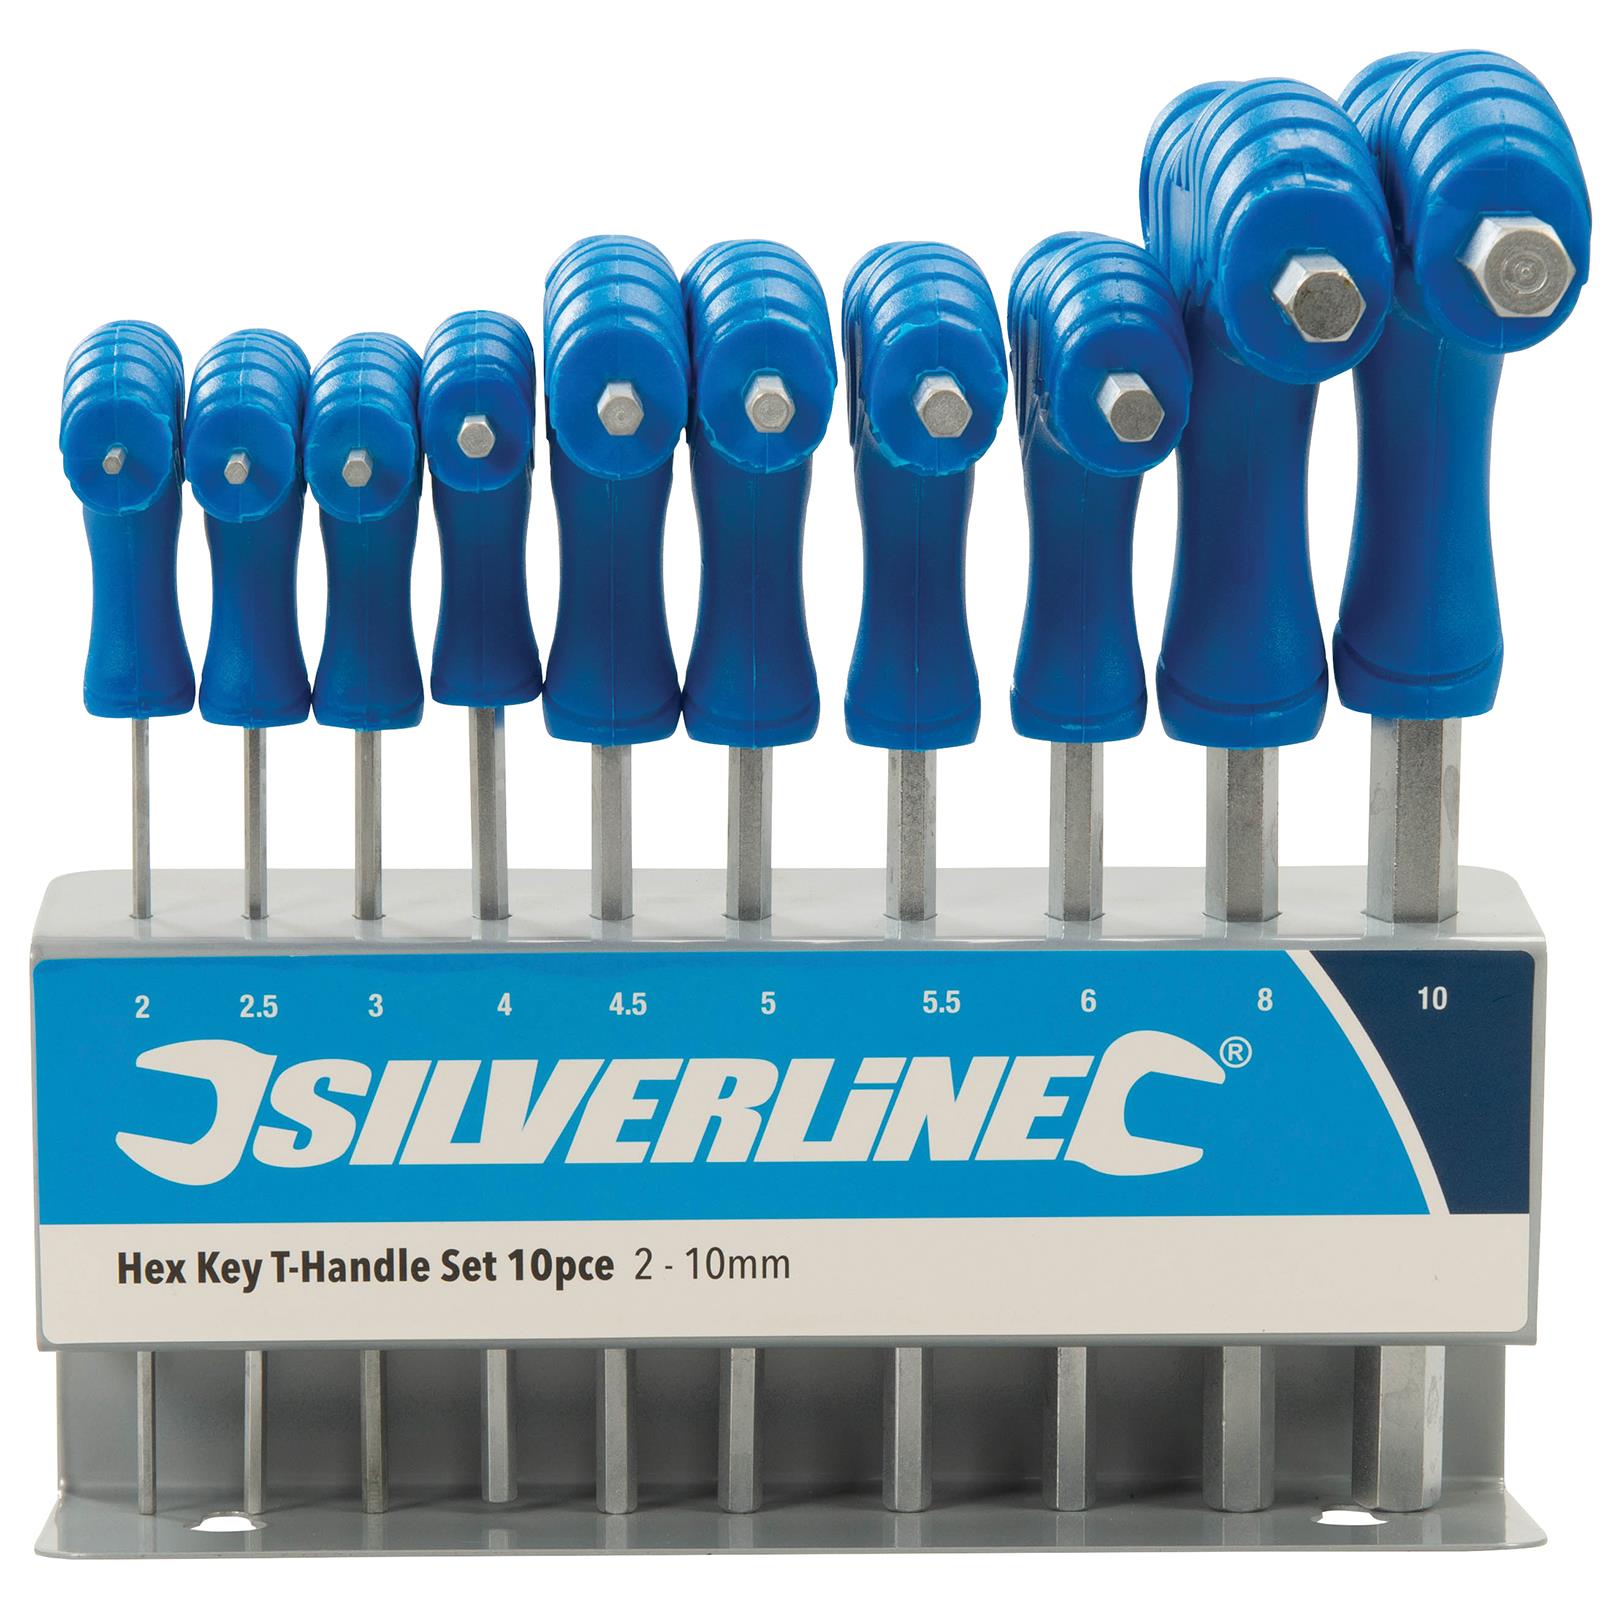 Silverline Hex Key T-Handle Set 10 Piece 2-10mm